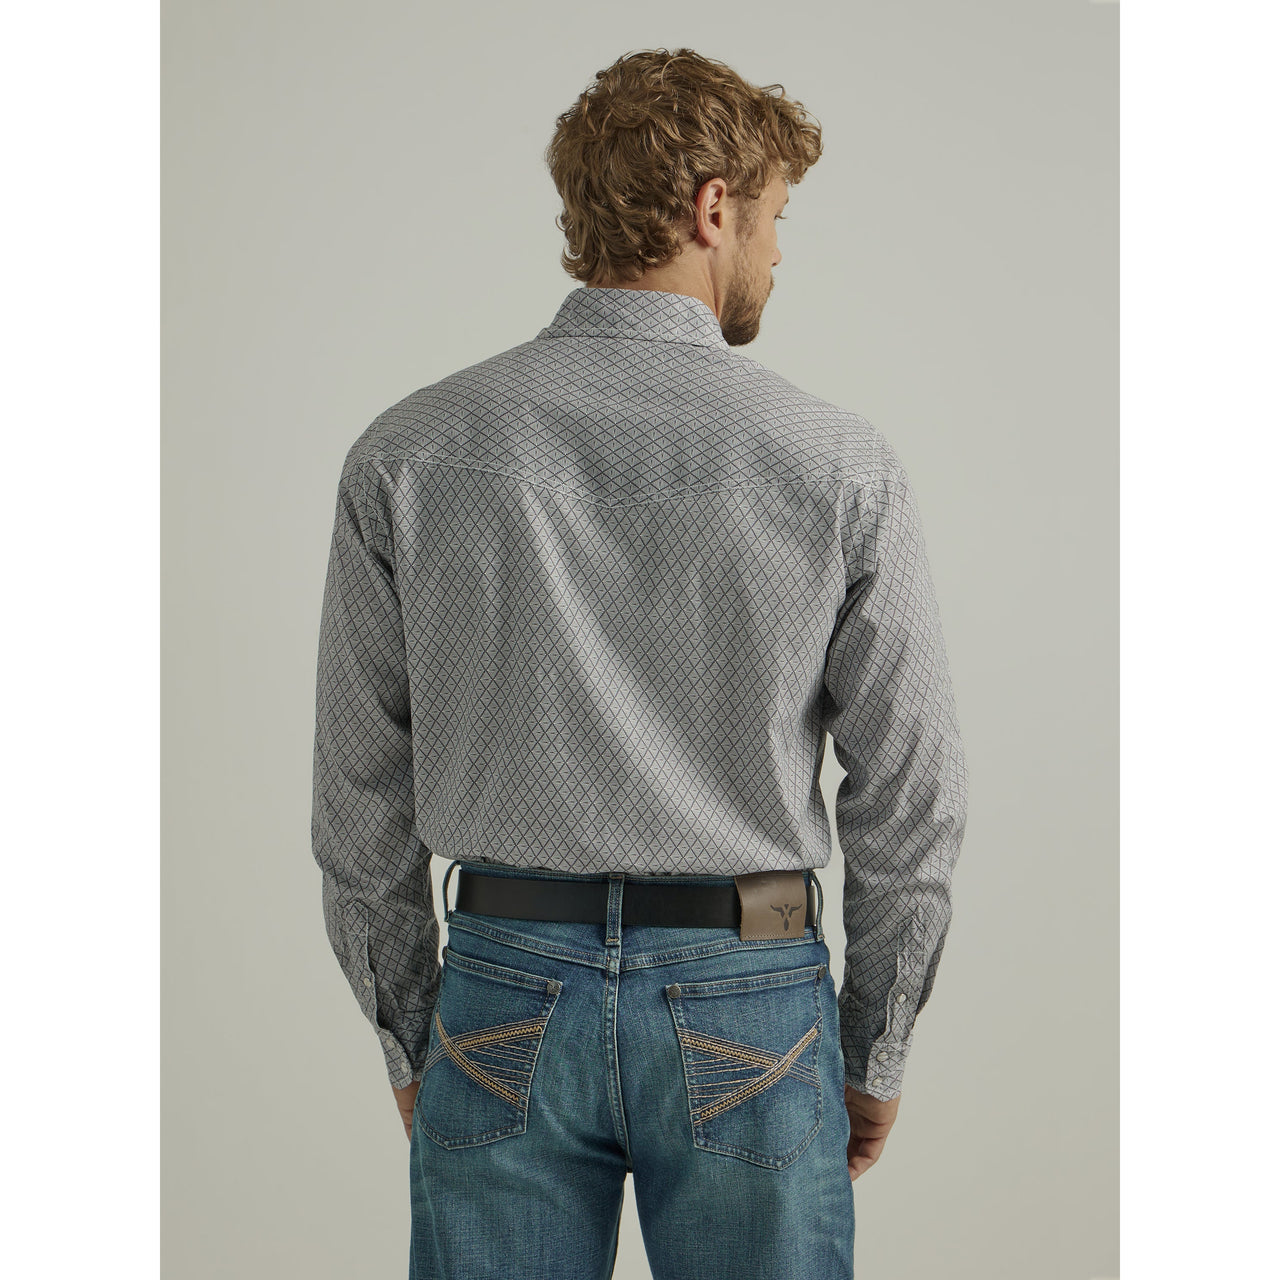 Wrangler Men's 20X Competition Advanced Comfort Long Sleeve Shirt - Grey